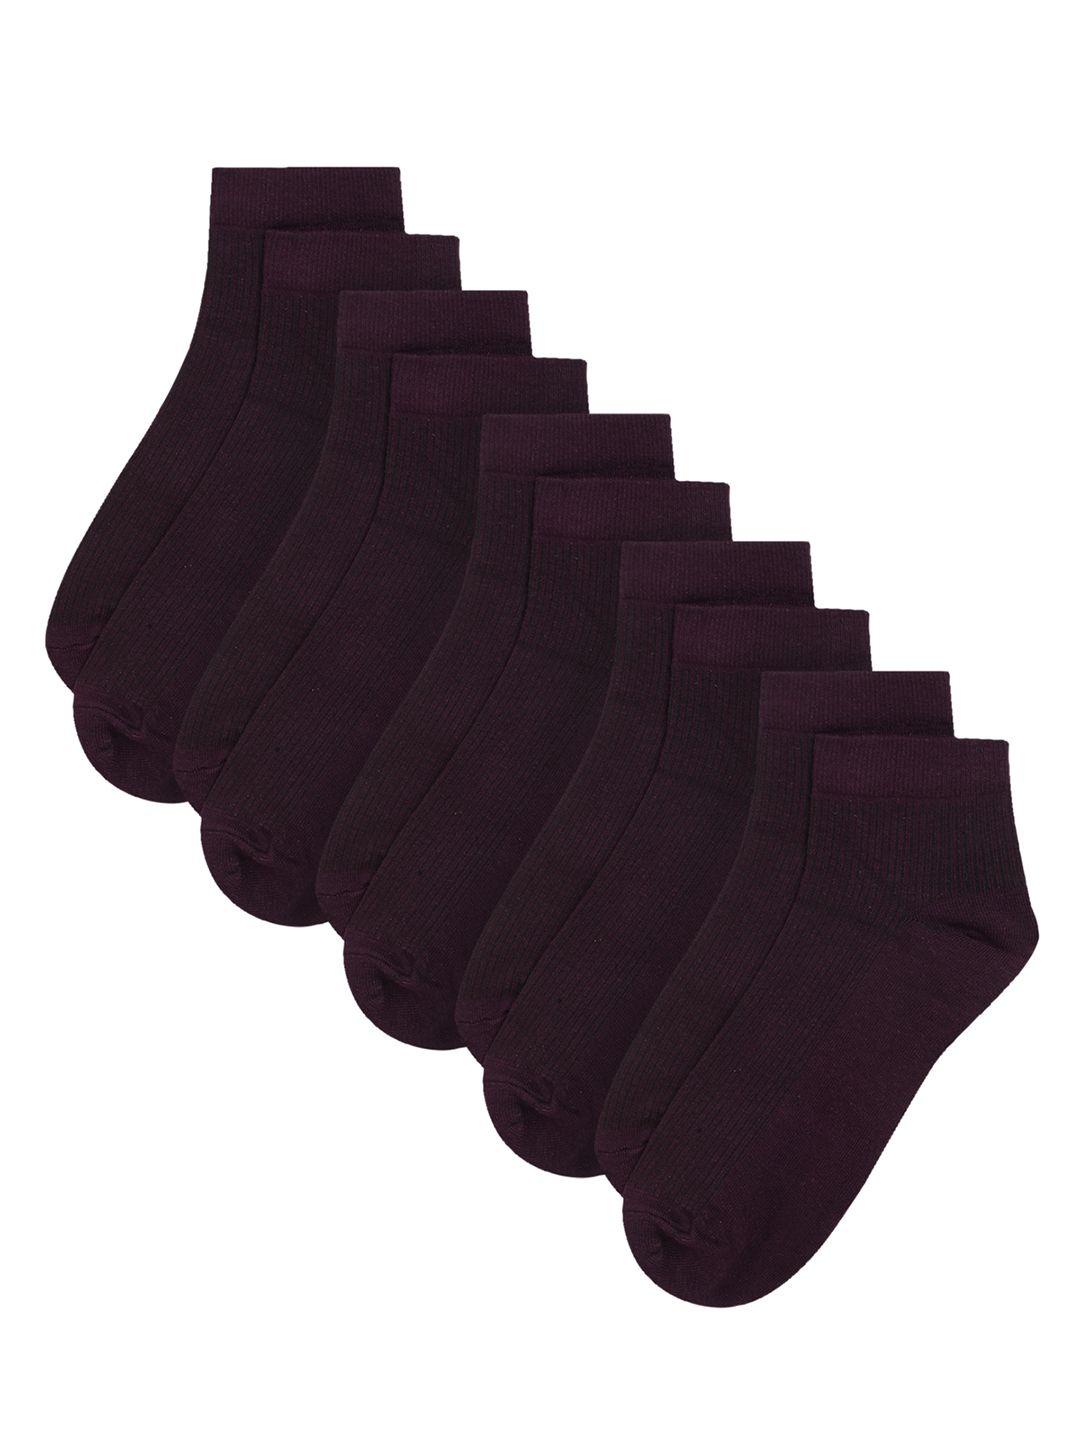 cantabil-men-set-of-5-burgundy-pure-cotton-ankle-length-socks